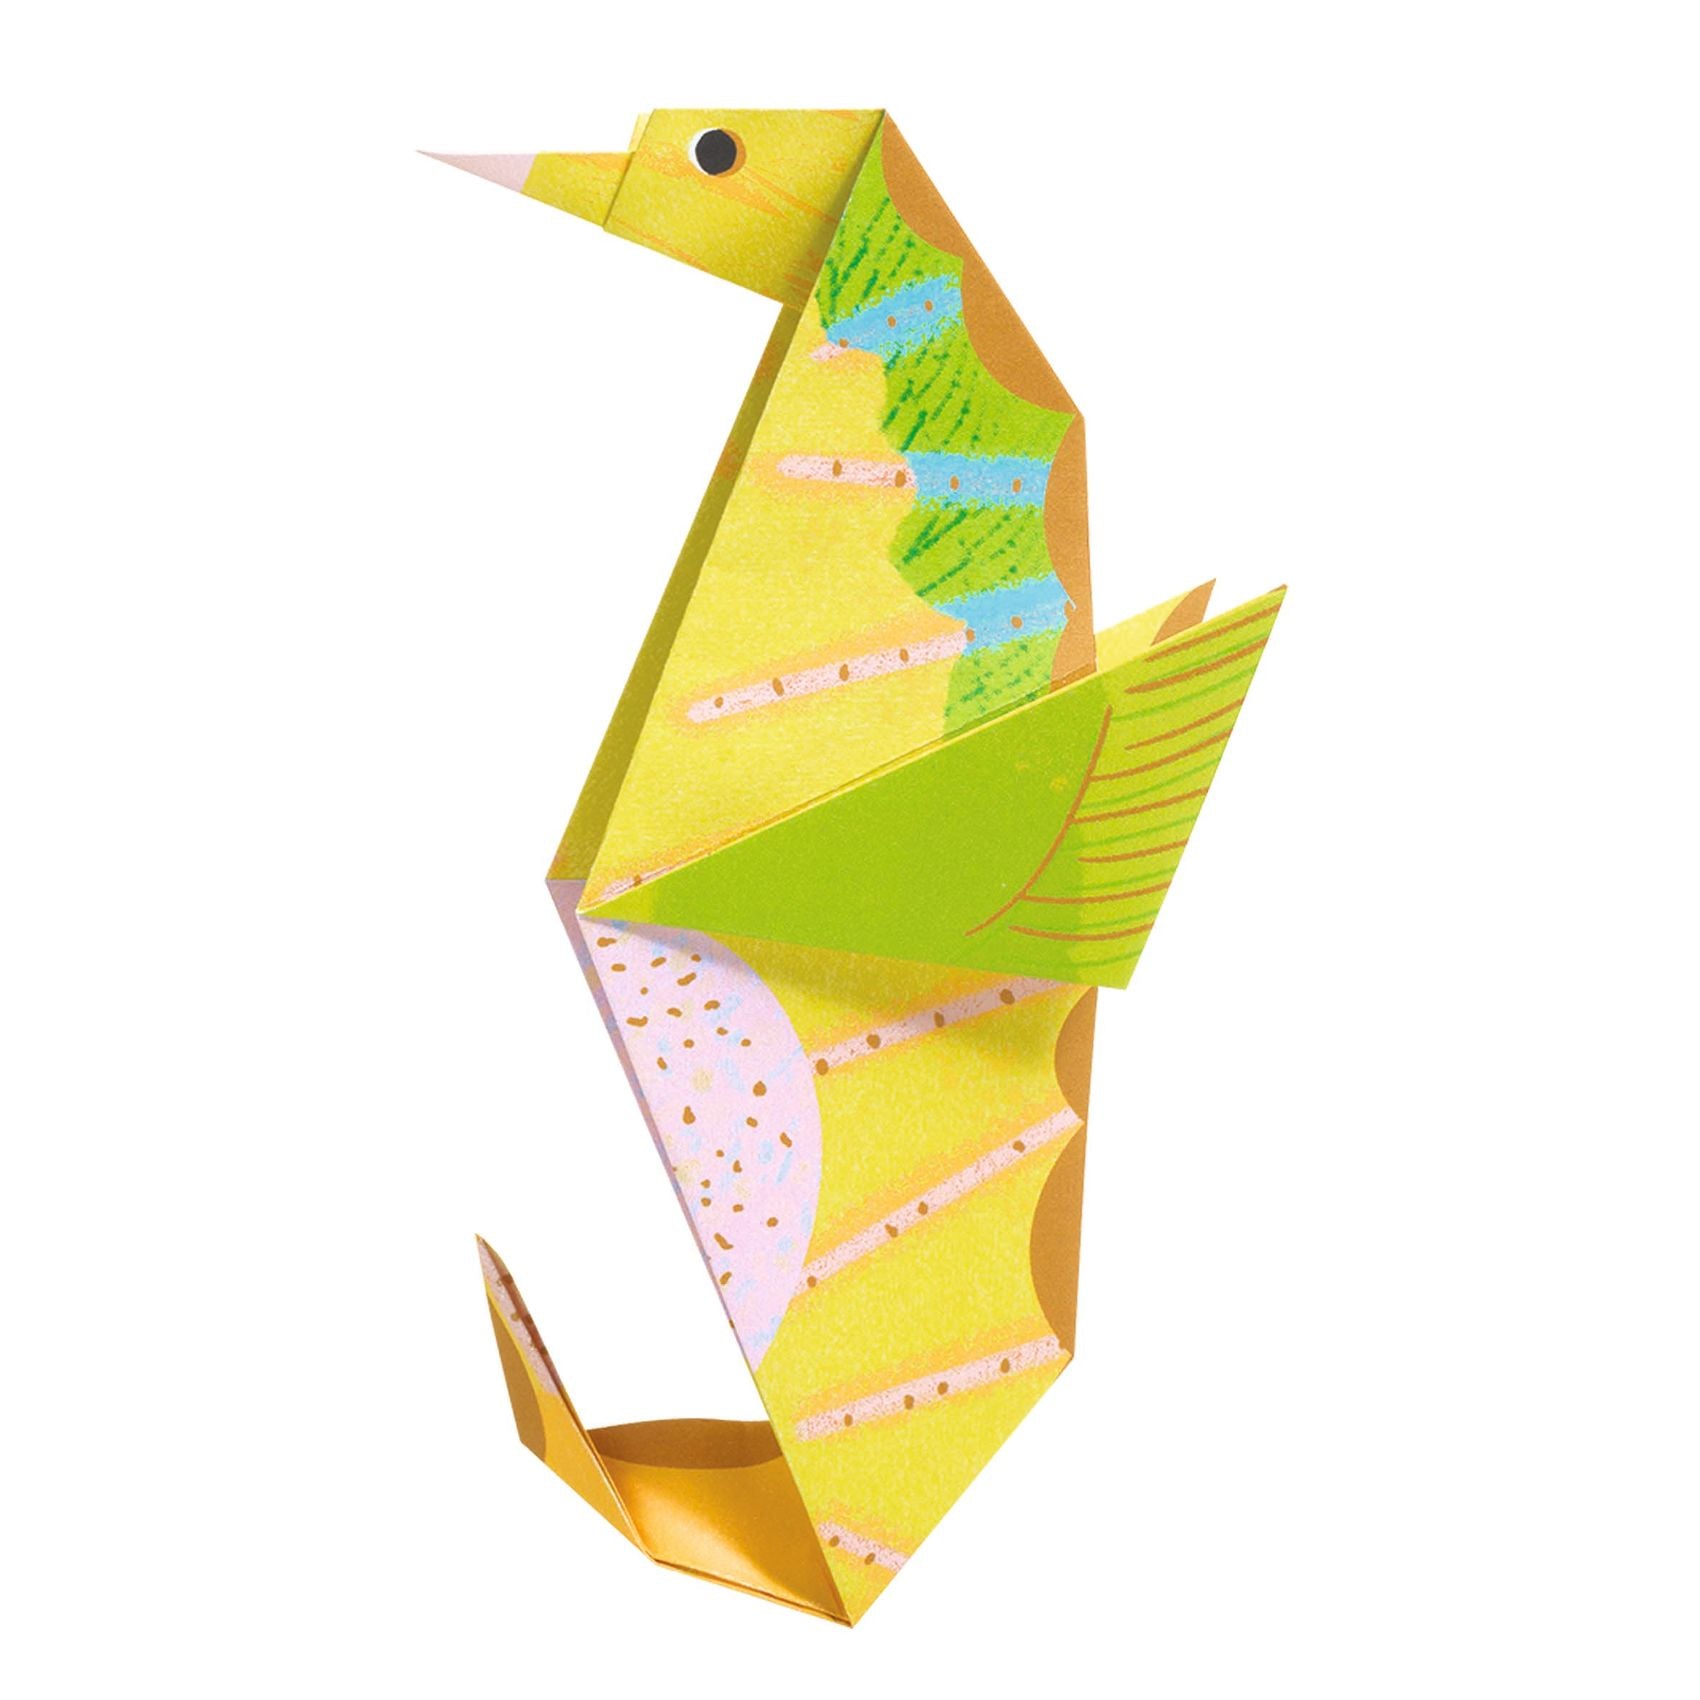 Djeco Origami – Sea Creatures